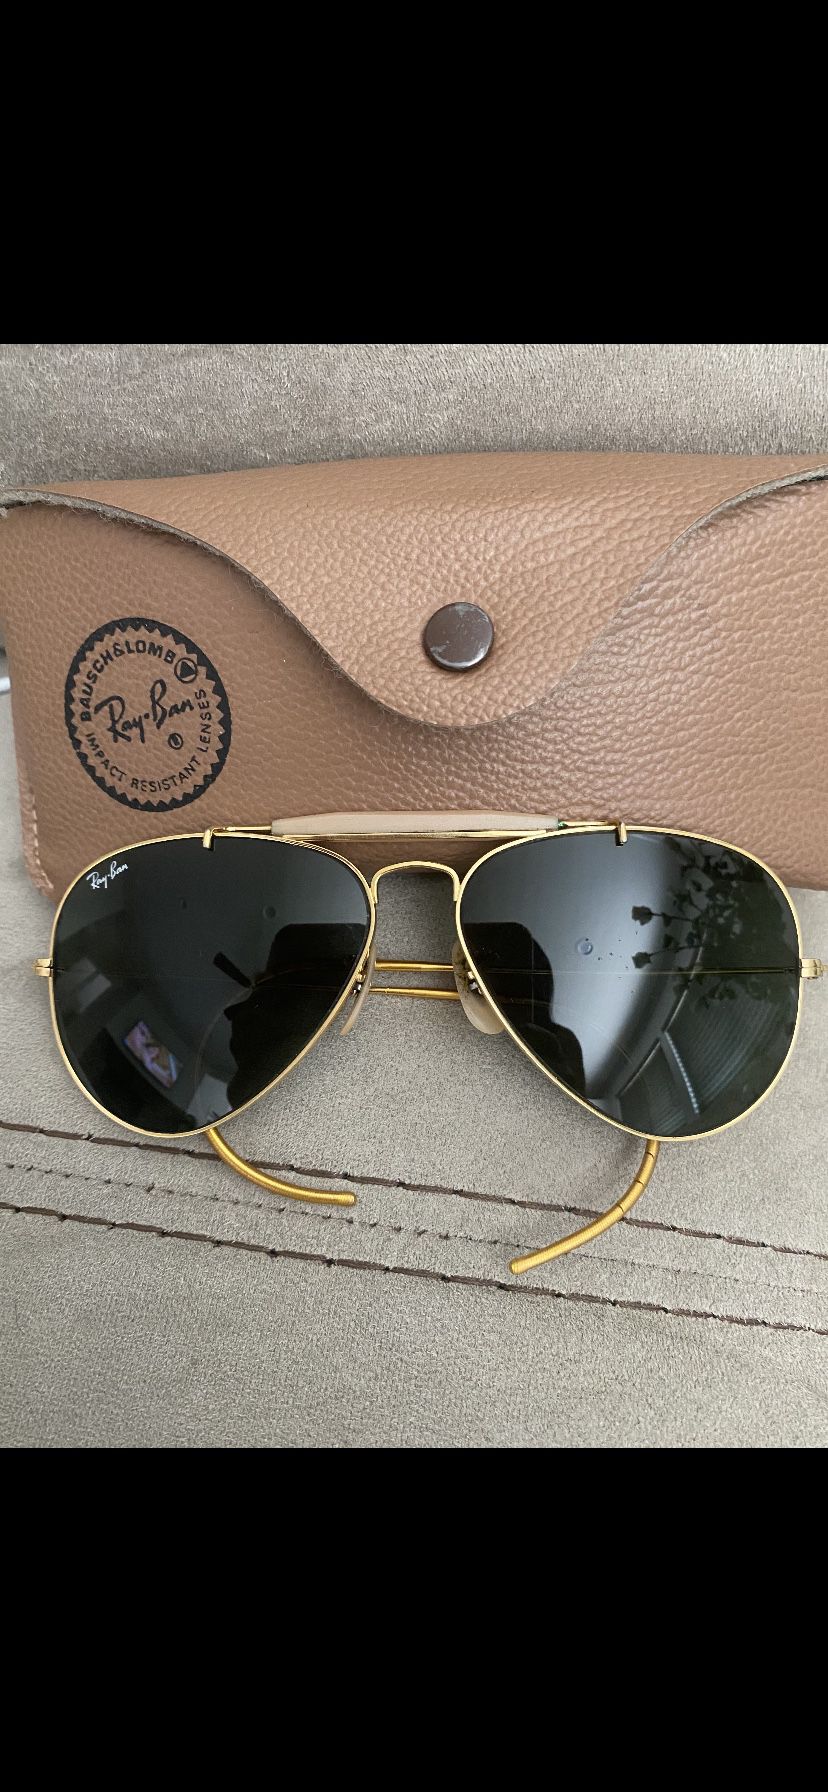 Vintage rayban sunglasses